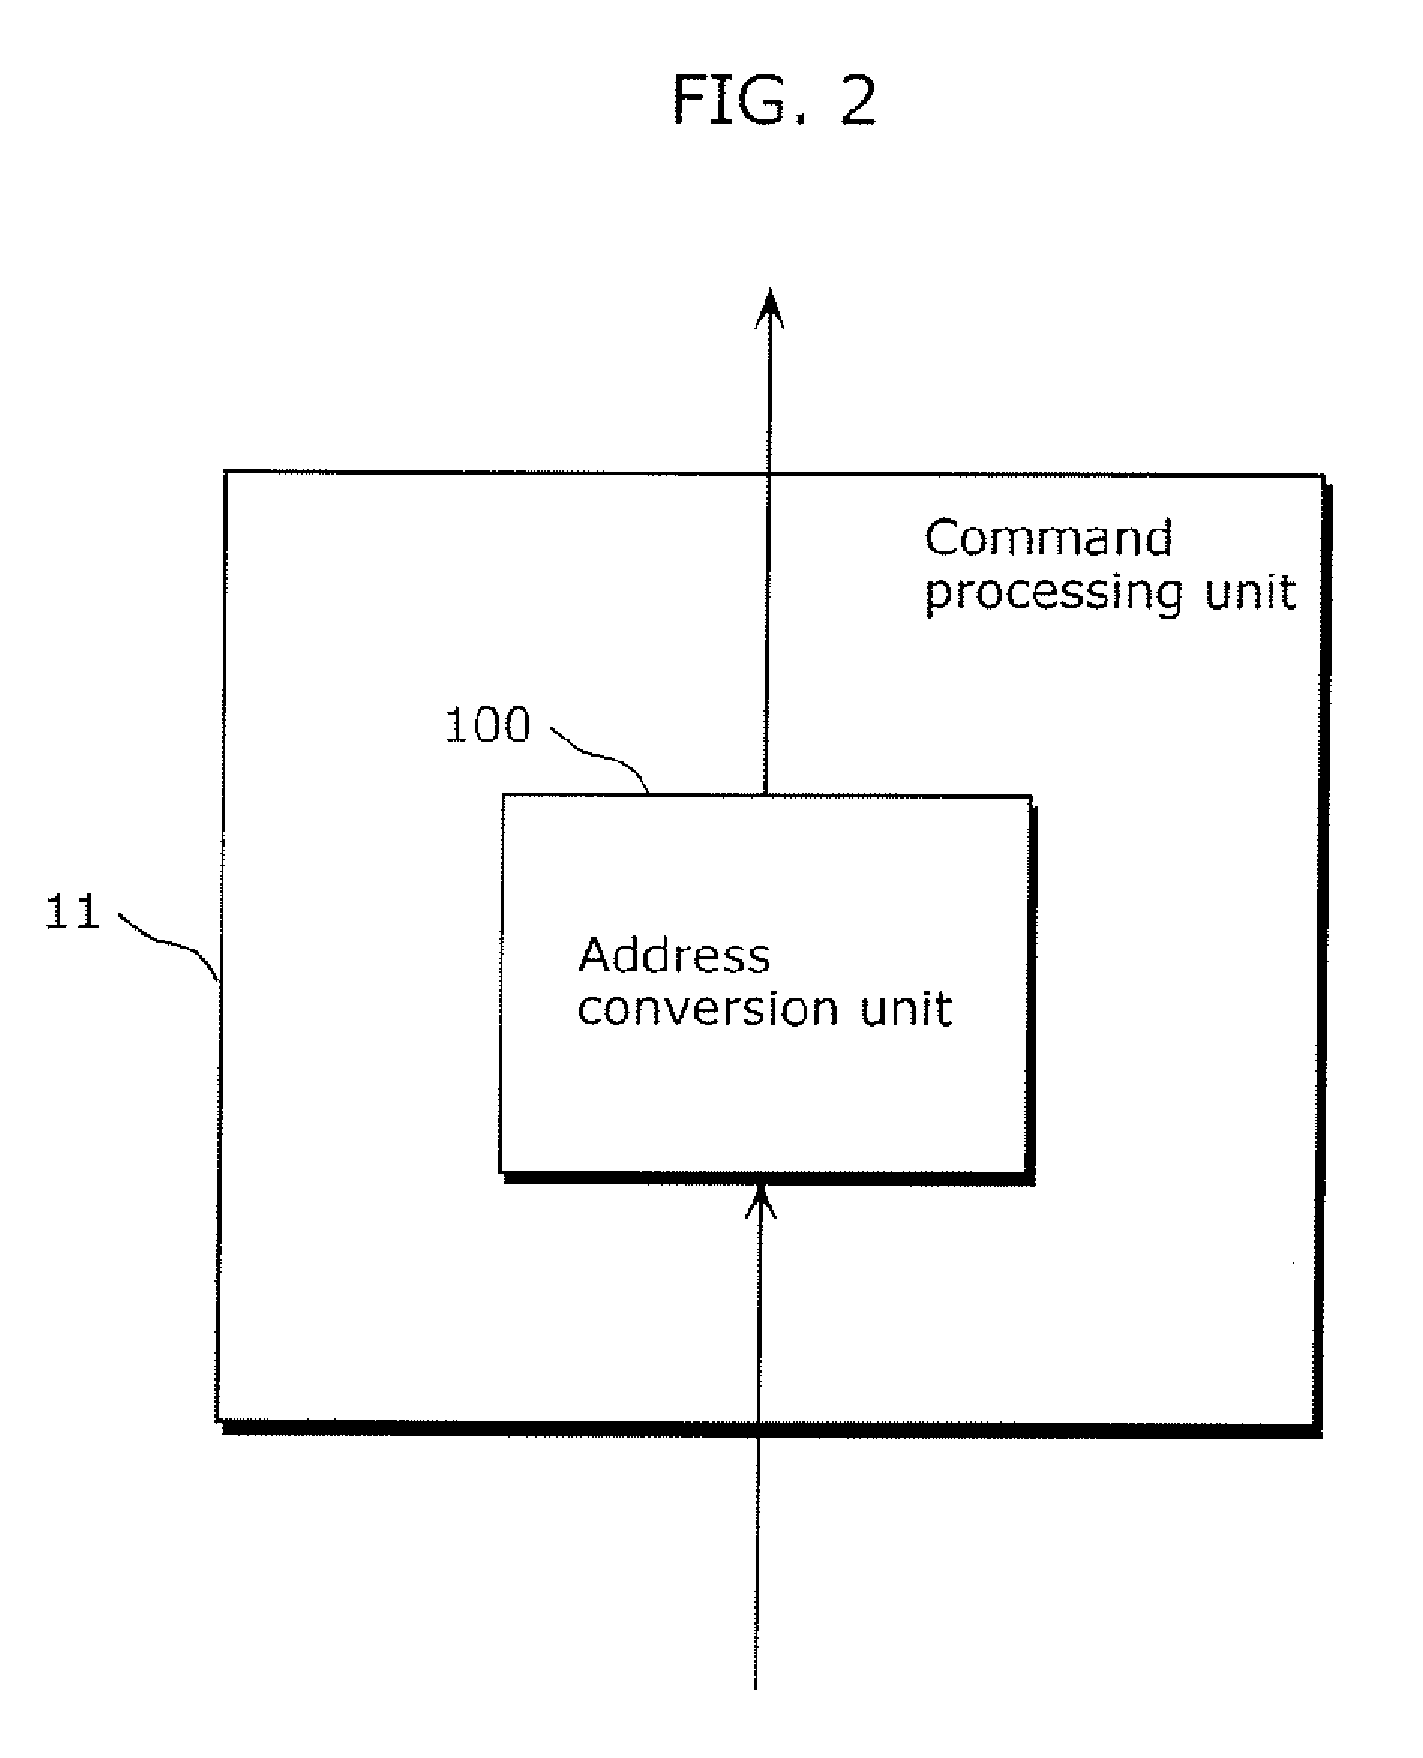 Burst memory access method to rectangular area